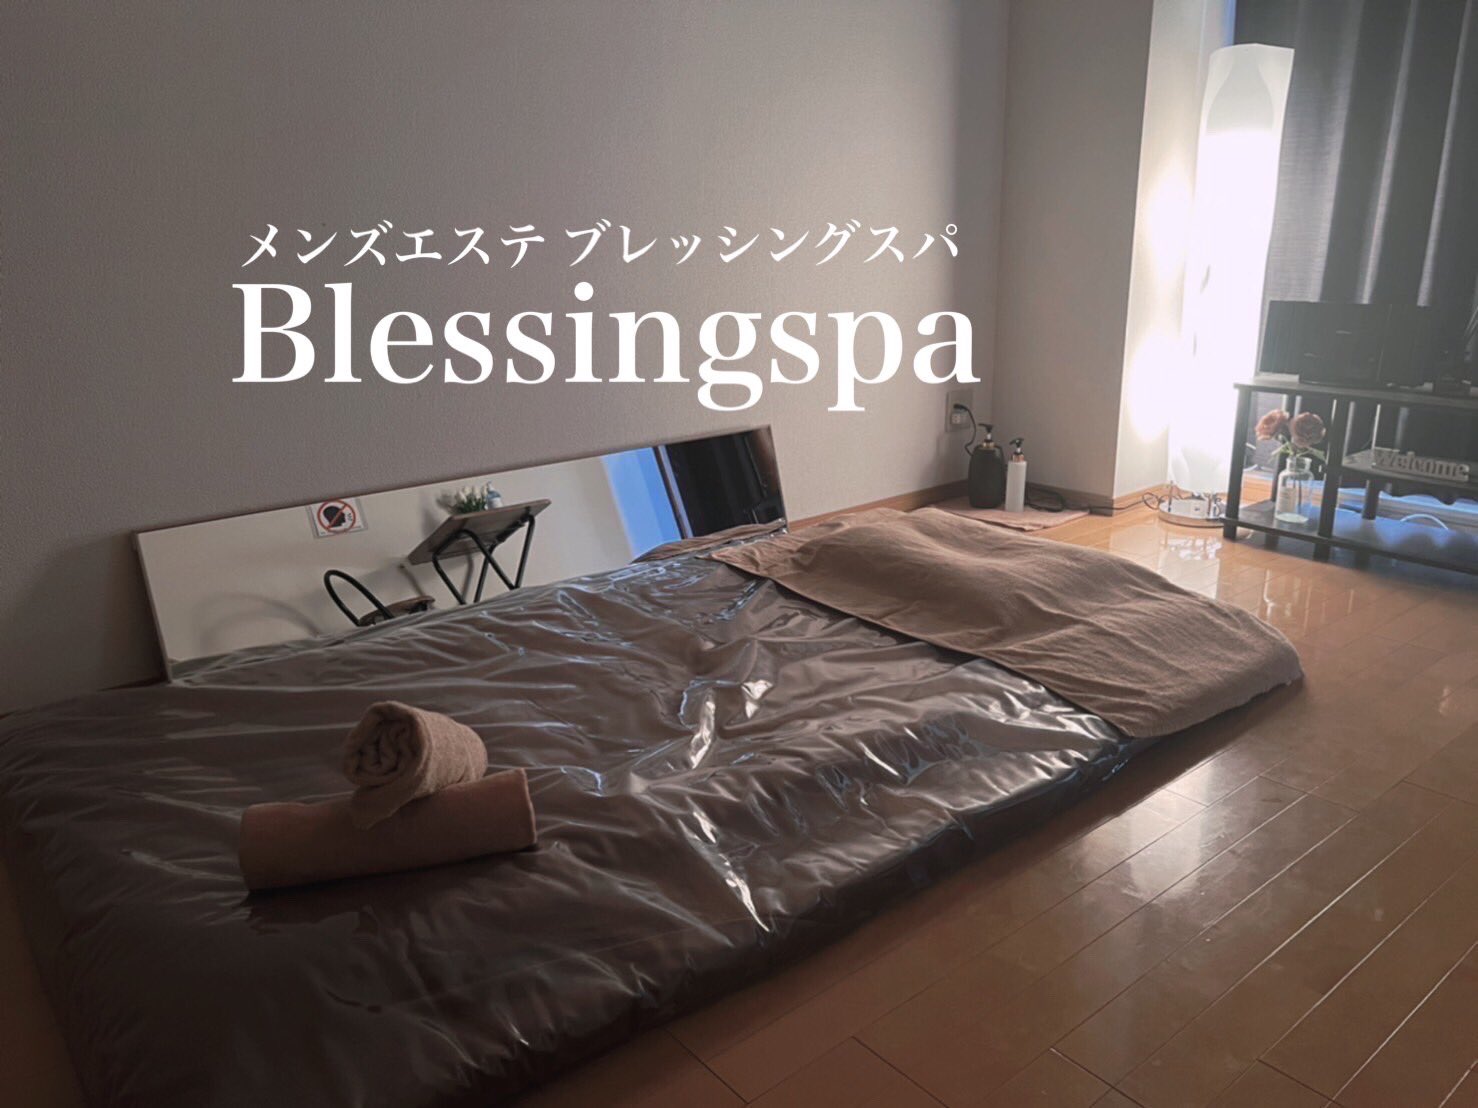 Blessing Spa（ブレッシングスパ）のメイン画像